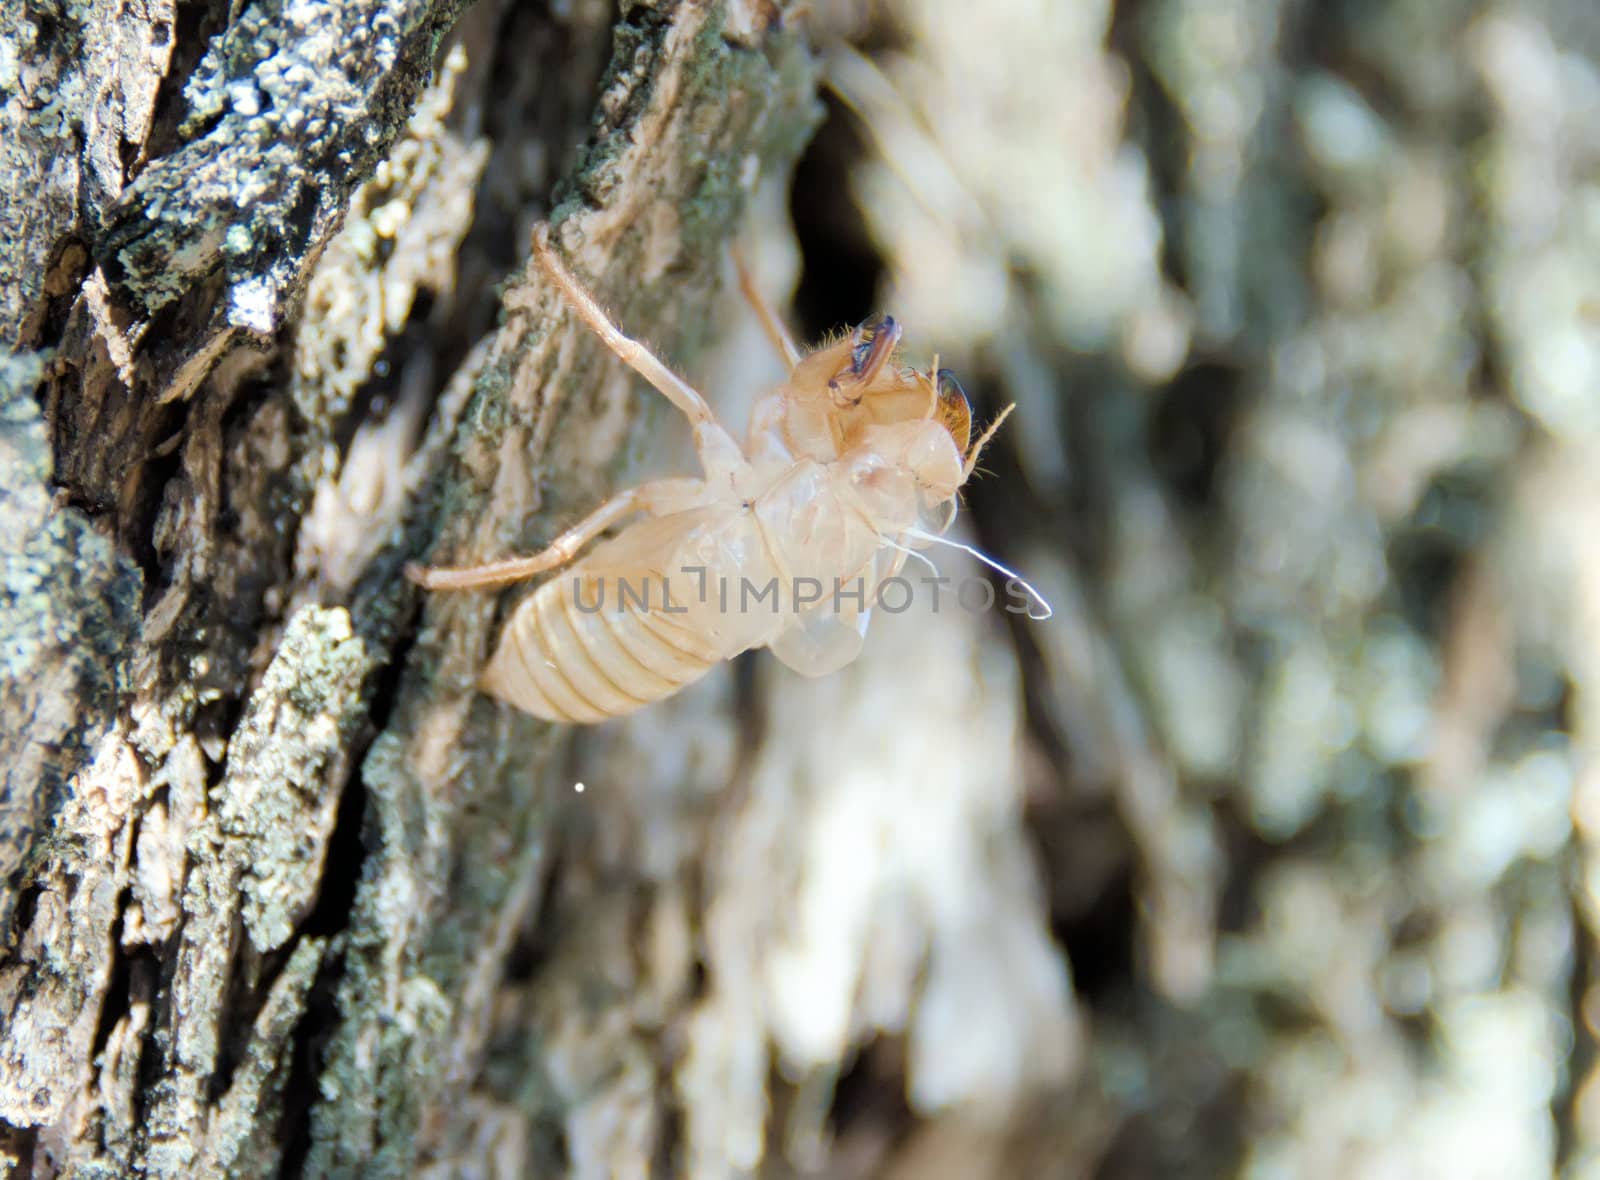 The metamorphosis of the cicada on a tree